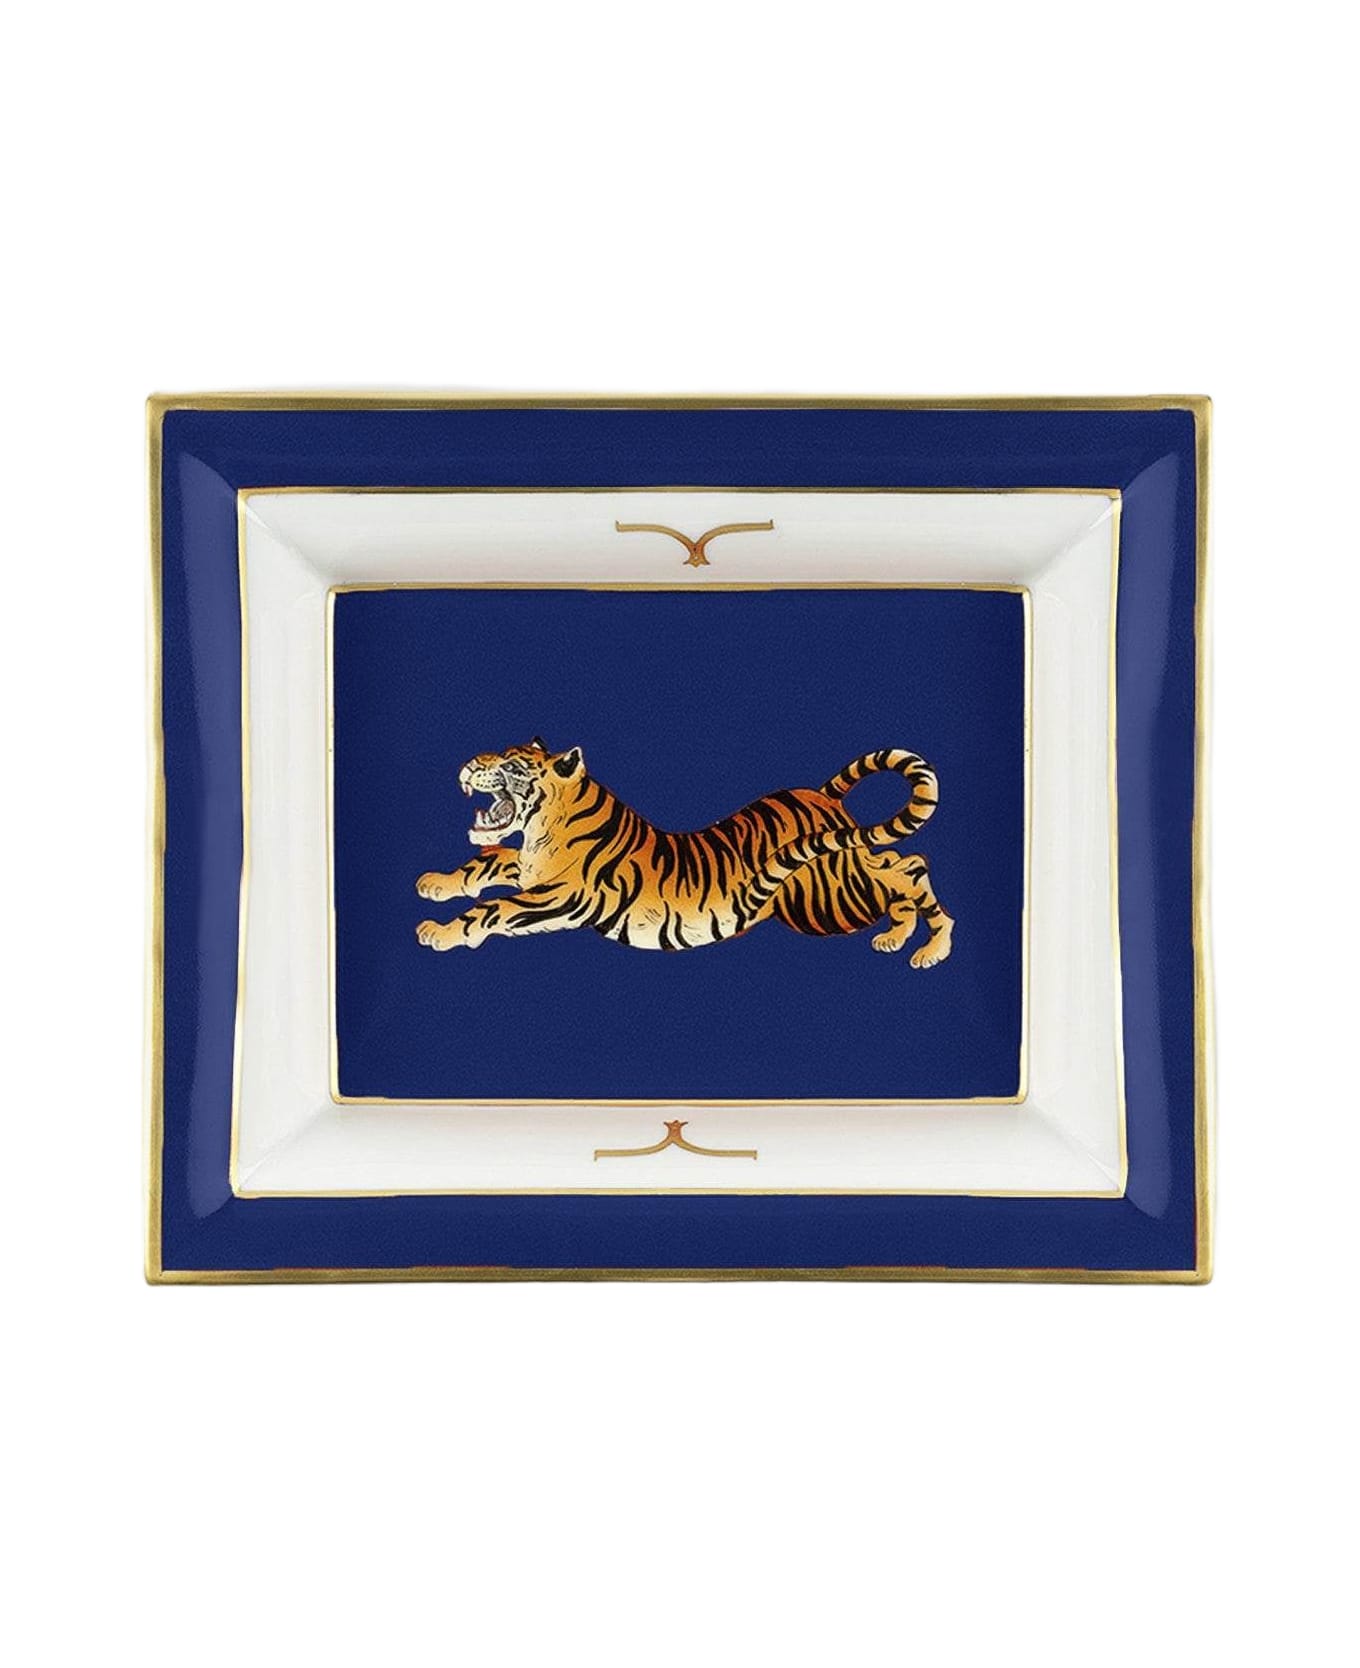 Larusmiani Pocket Emptier 'tigre' Tray - Blue